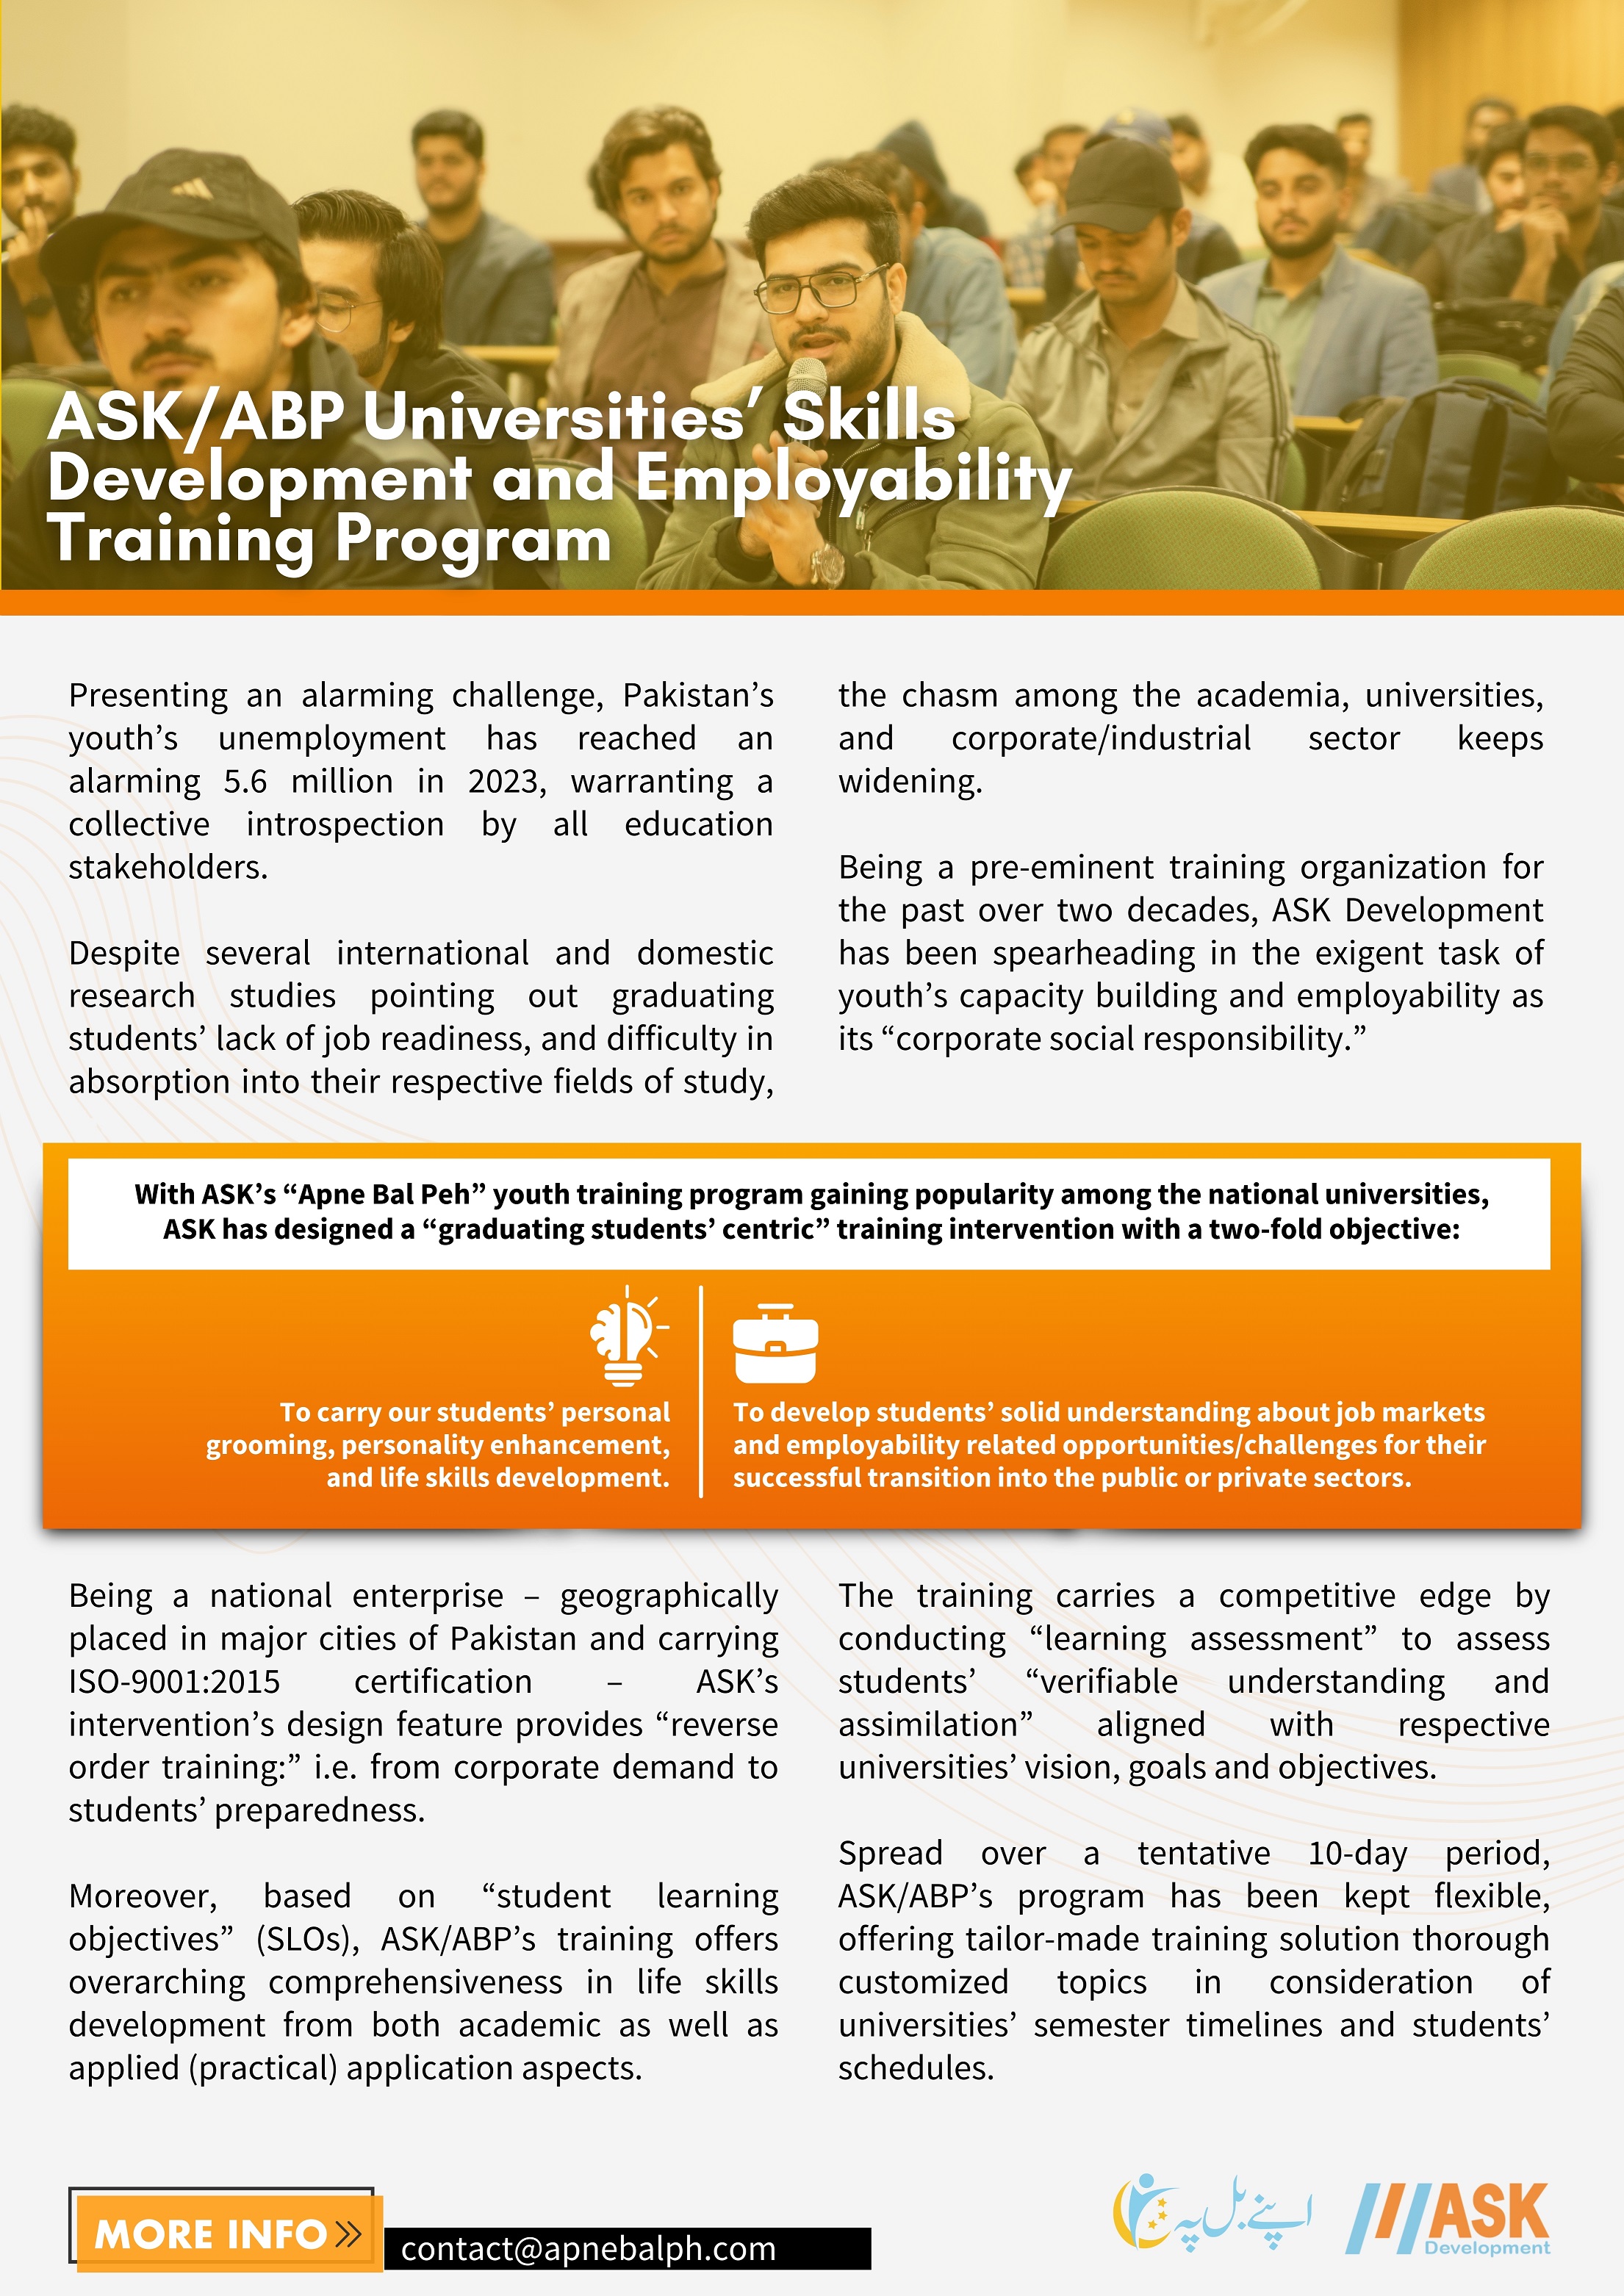 ASK/ABP Universities’ Skills Program